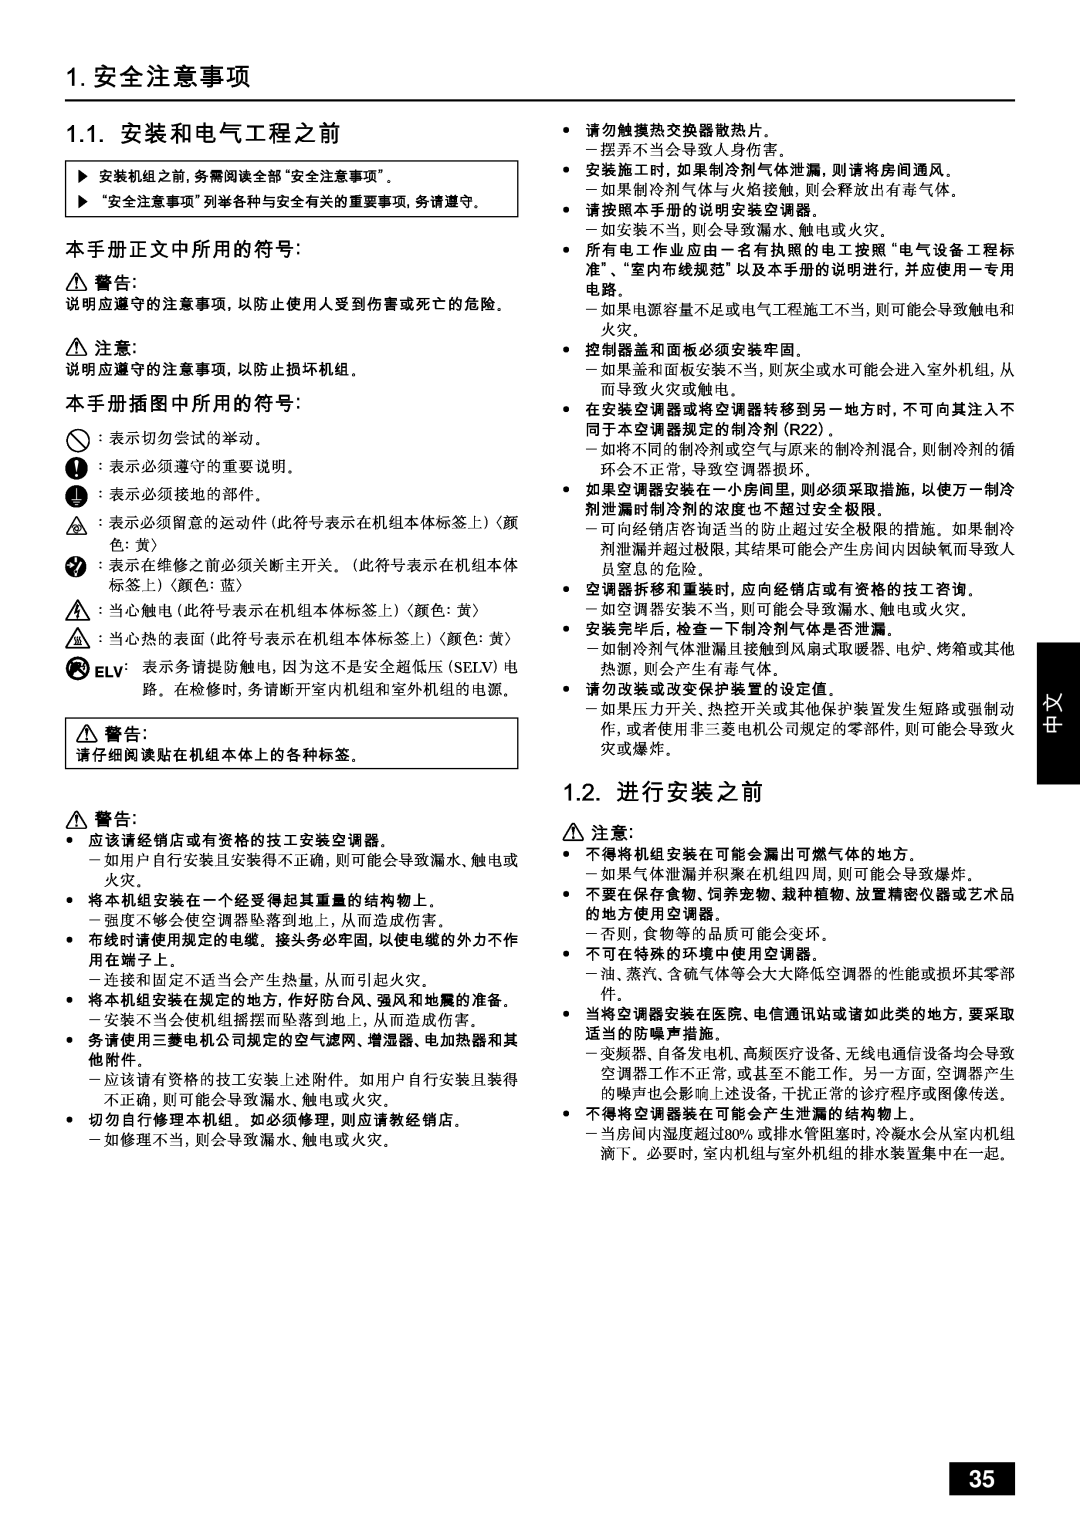 Mitsubishi Electronics PUHY-YMC installation manual Nknk, Nkok 